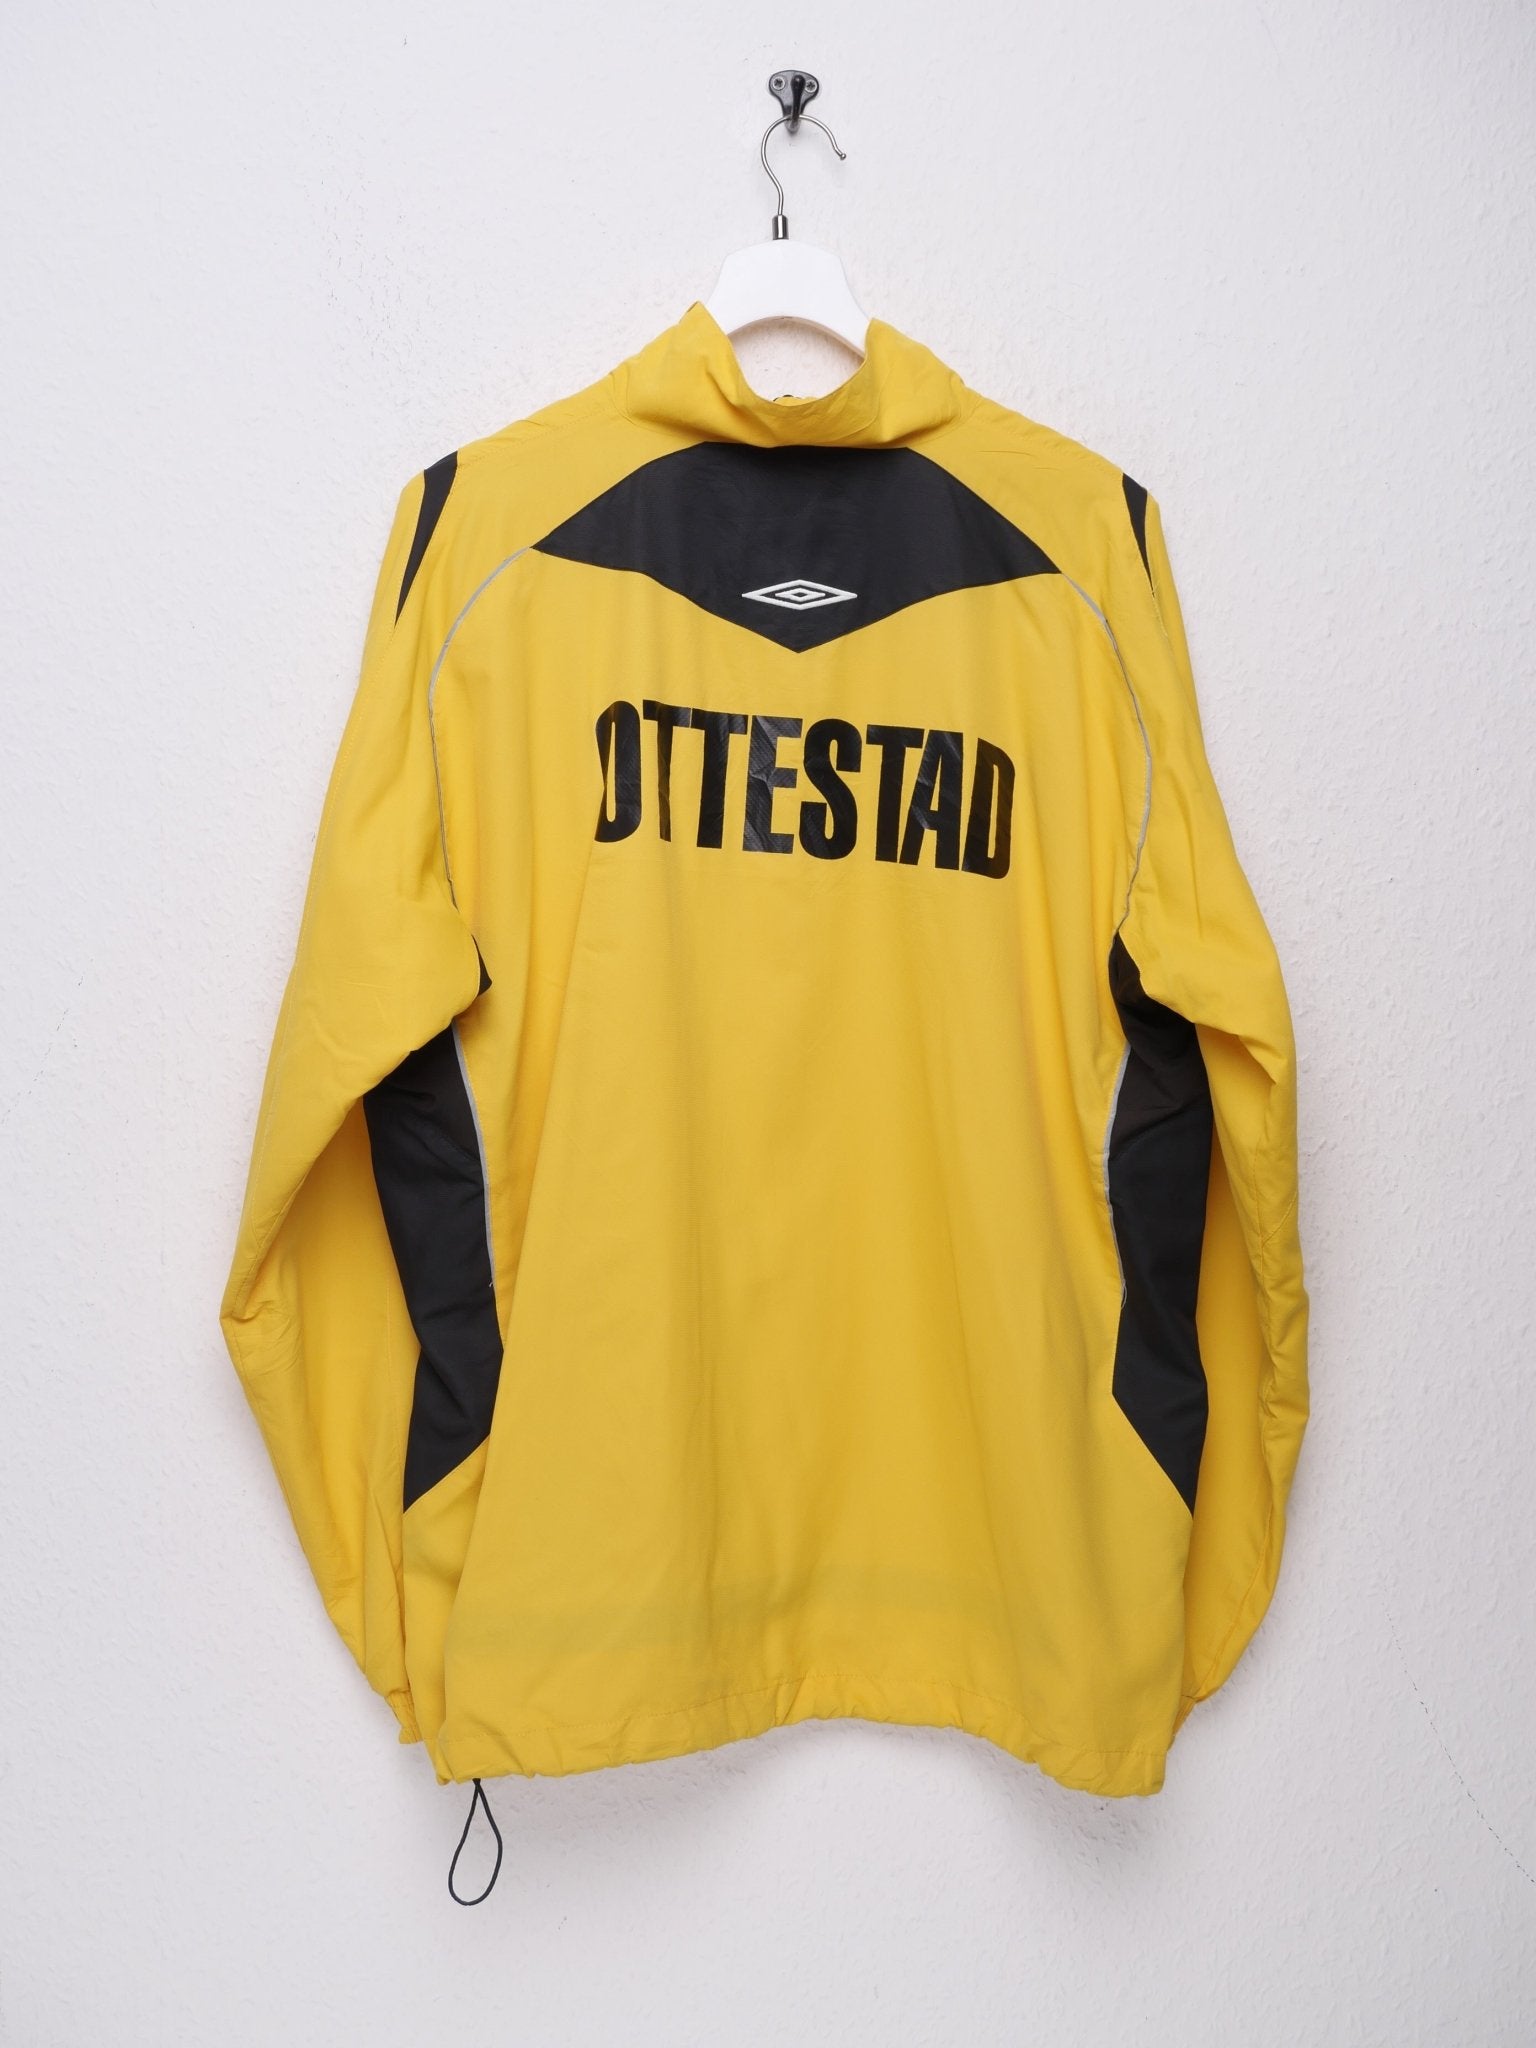 Umbro Ottostad Oil embroidered Logo yellow Track Jacket - Peeces